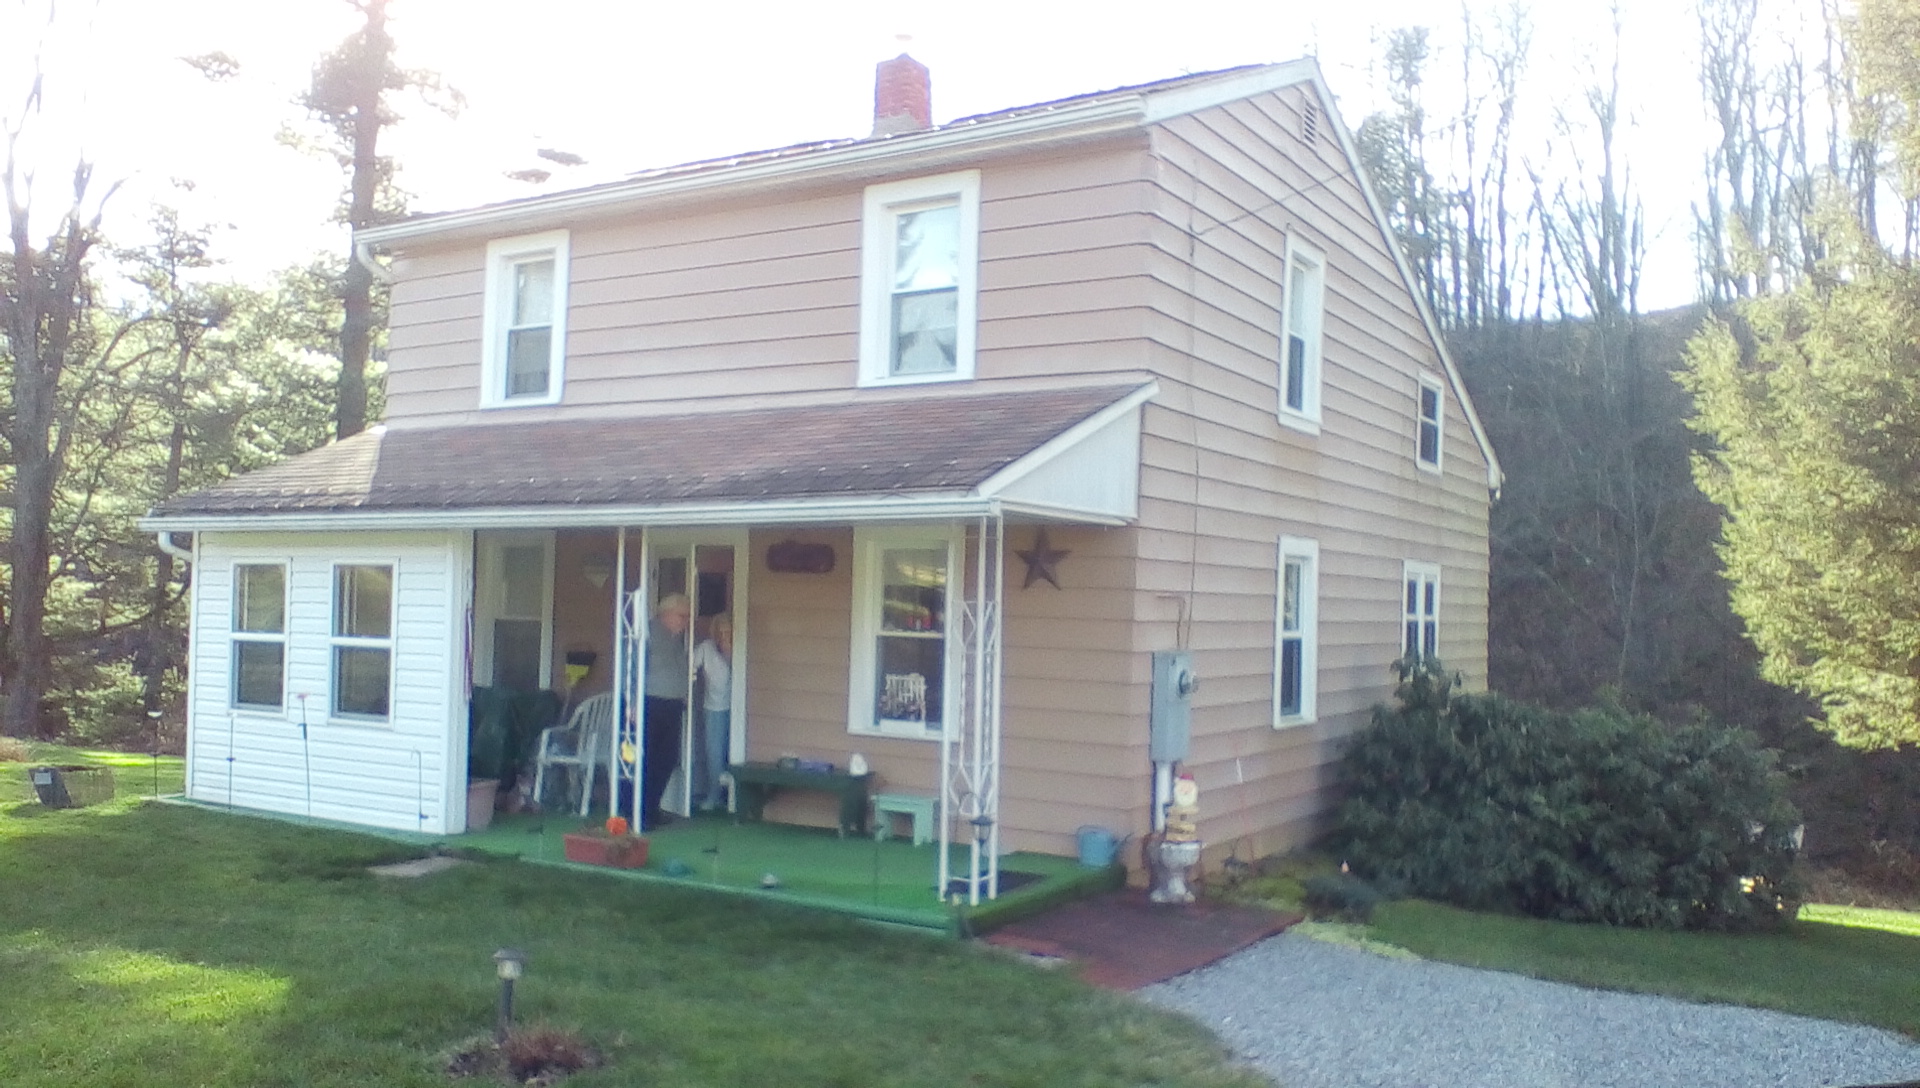 Original Krause house (2015) Cove, MD